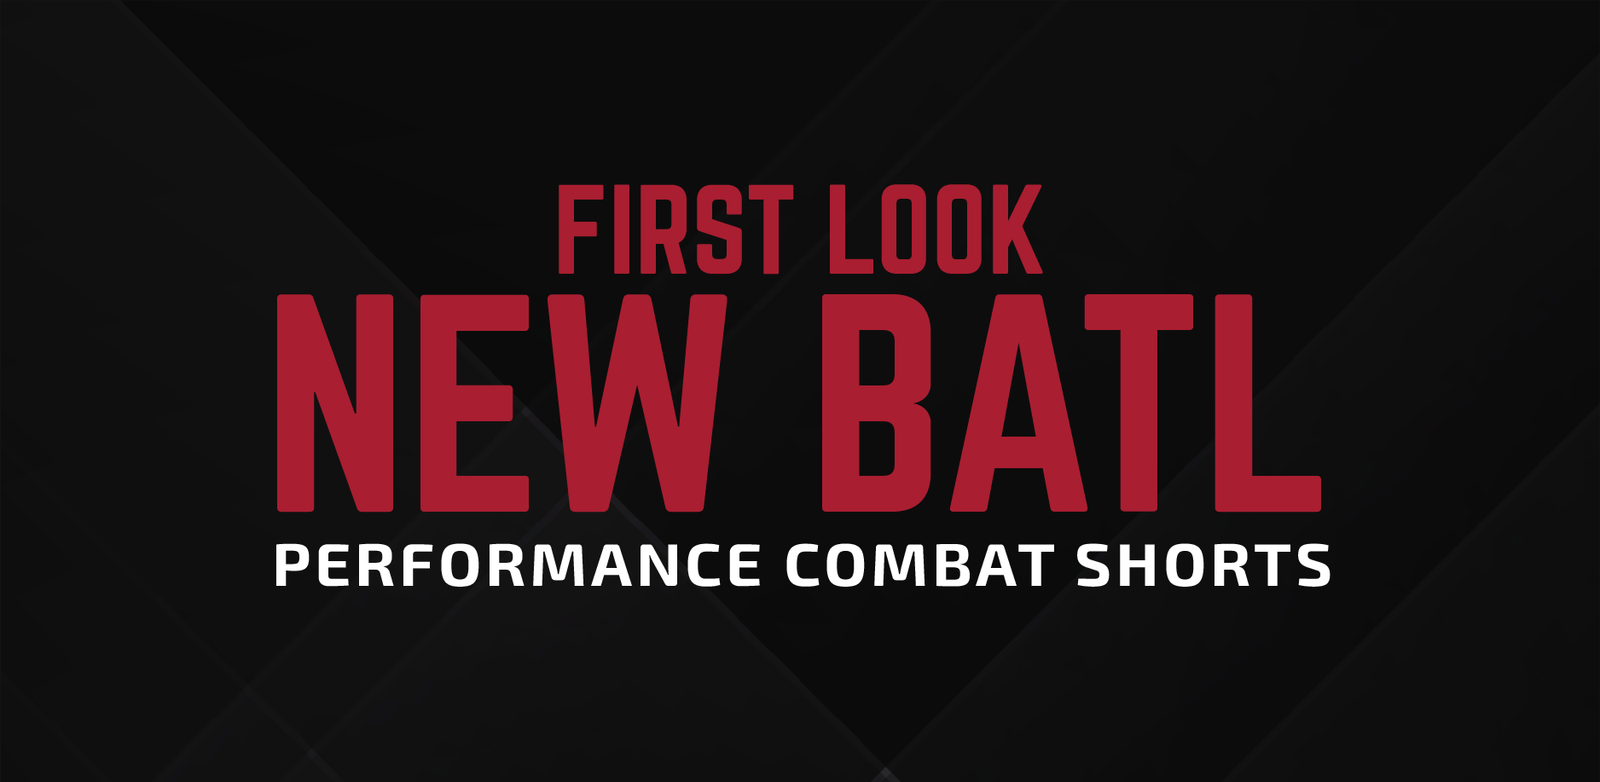 FIRST LOOK *NEW* BATL PERFORMANCE COMBAT SHORTS